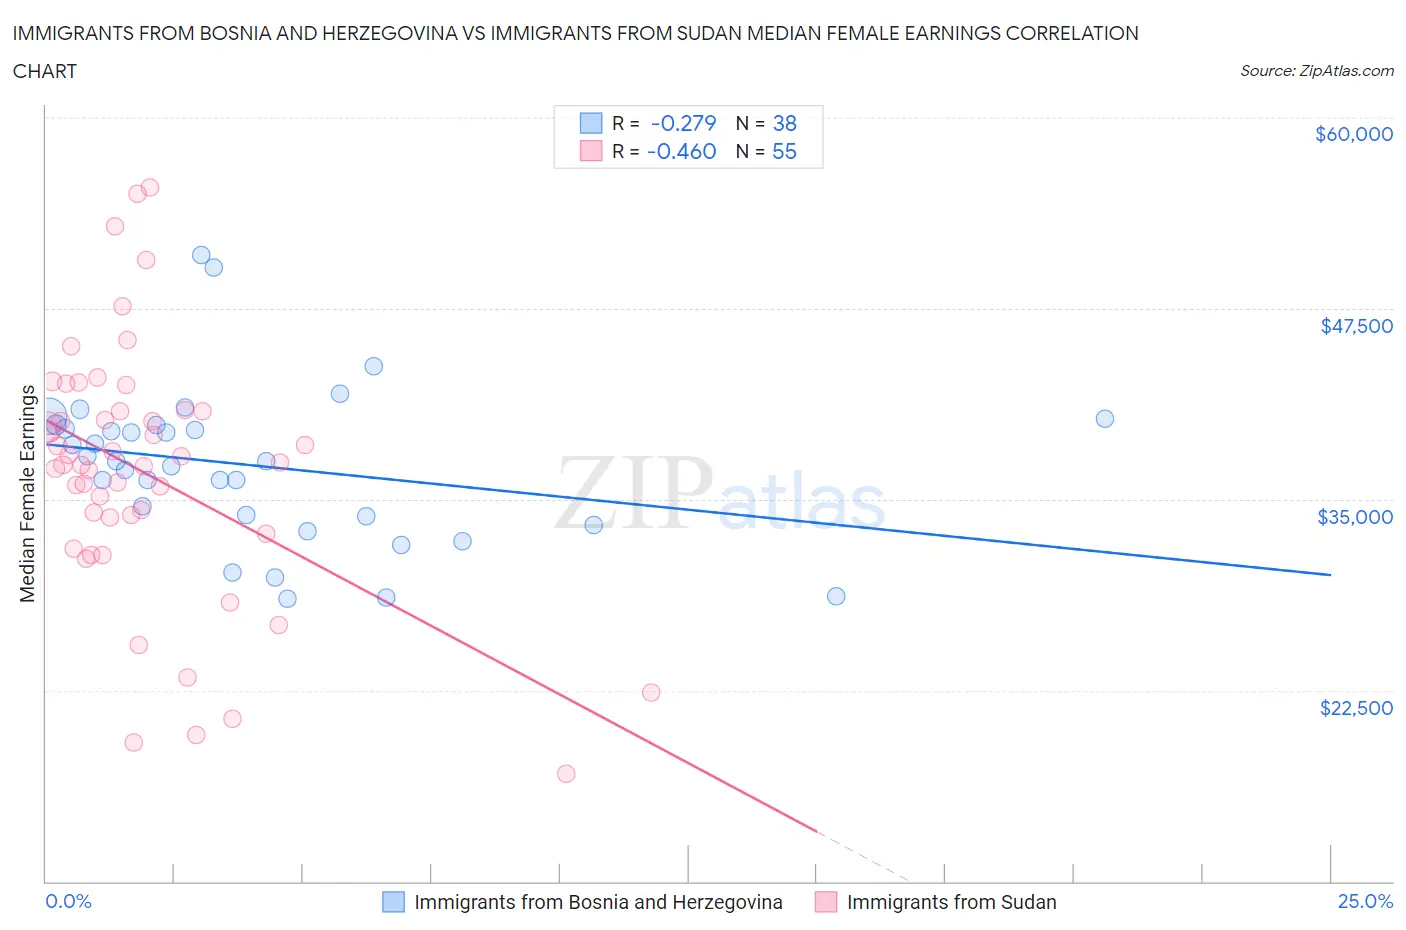 Immigrants from Bosnia and Herzegovina vs Immigrants from Sudan Median Female Earnings